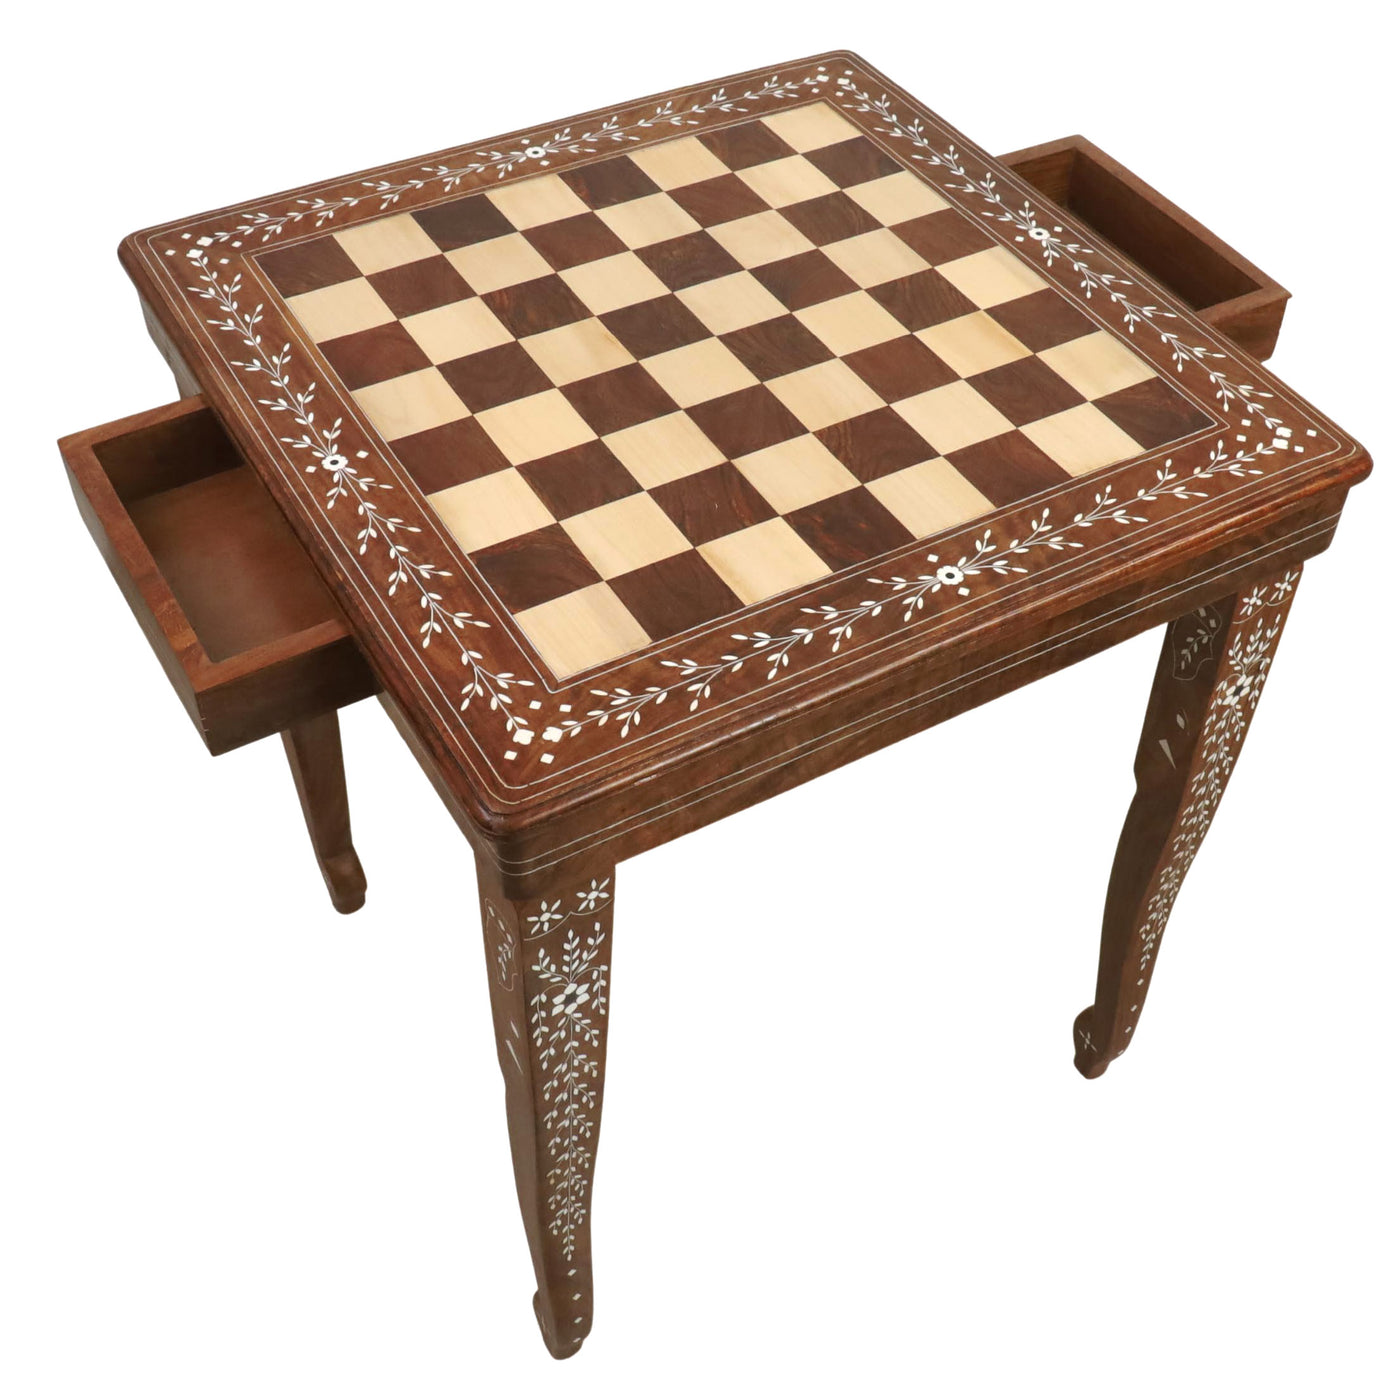 23" Regalia Luxury Chess Board Table with Reykjavik Series Staunton Chess Pieces - 3.8"